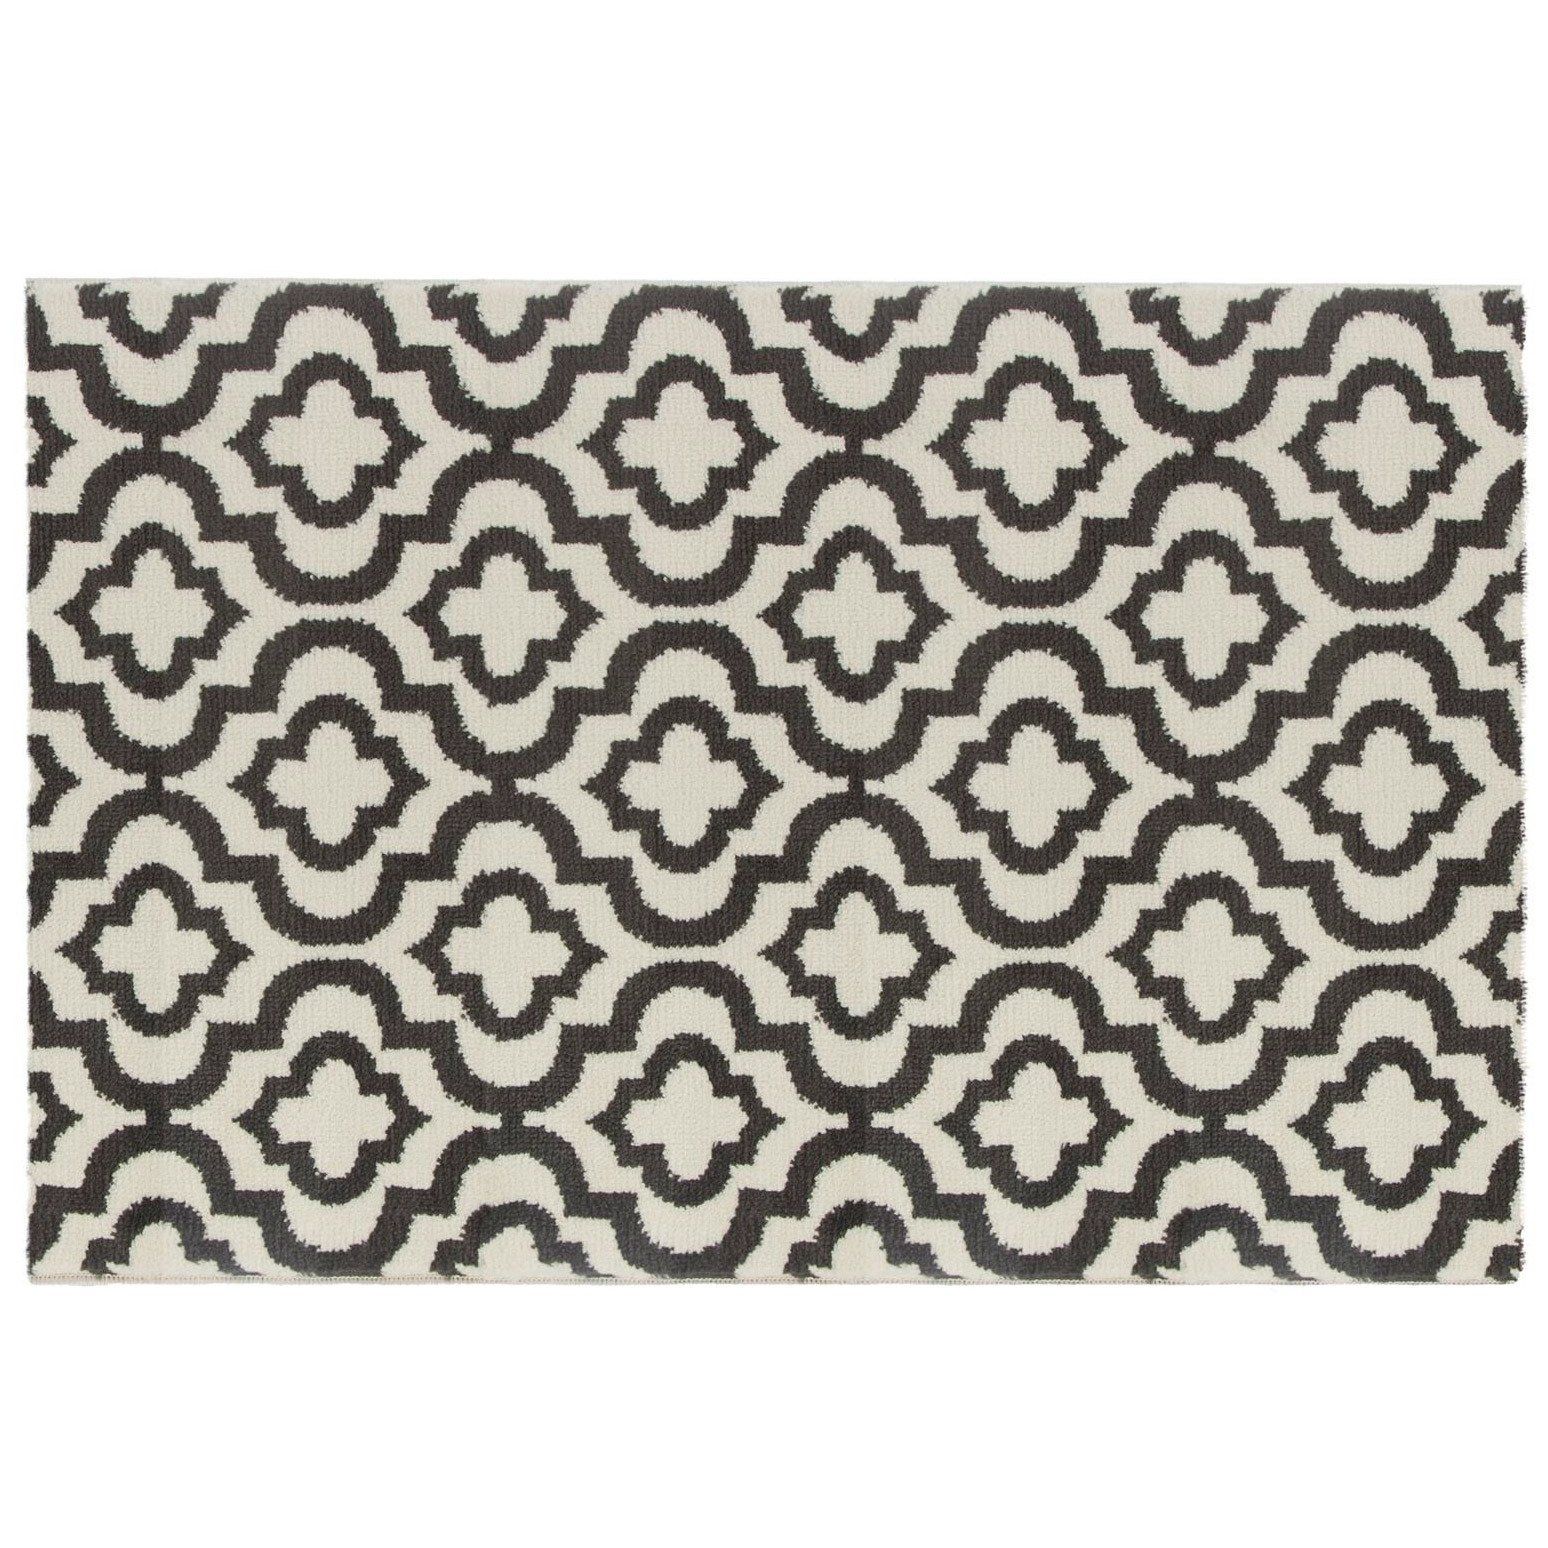 Atmosphera Dekorativní koberec v černé a bílé vzory Mervin, 60 x 90 cm - EMAKO.CZ s.r.o.